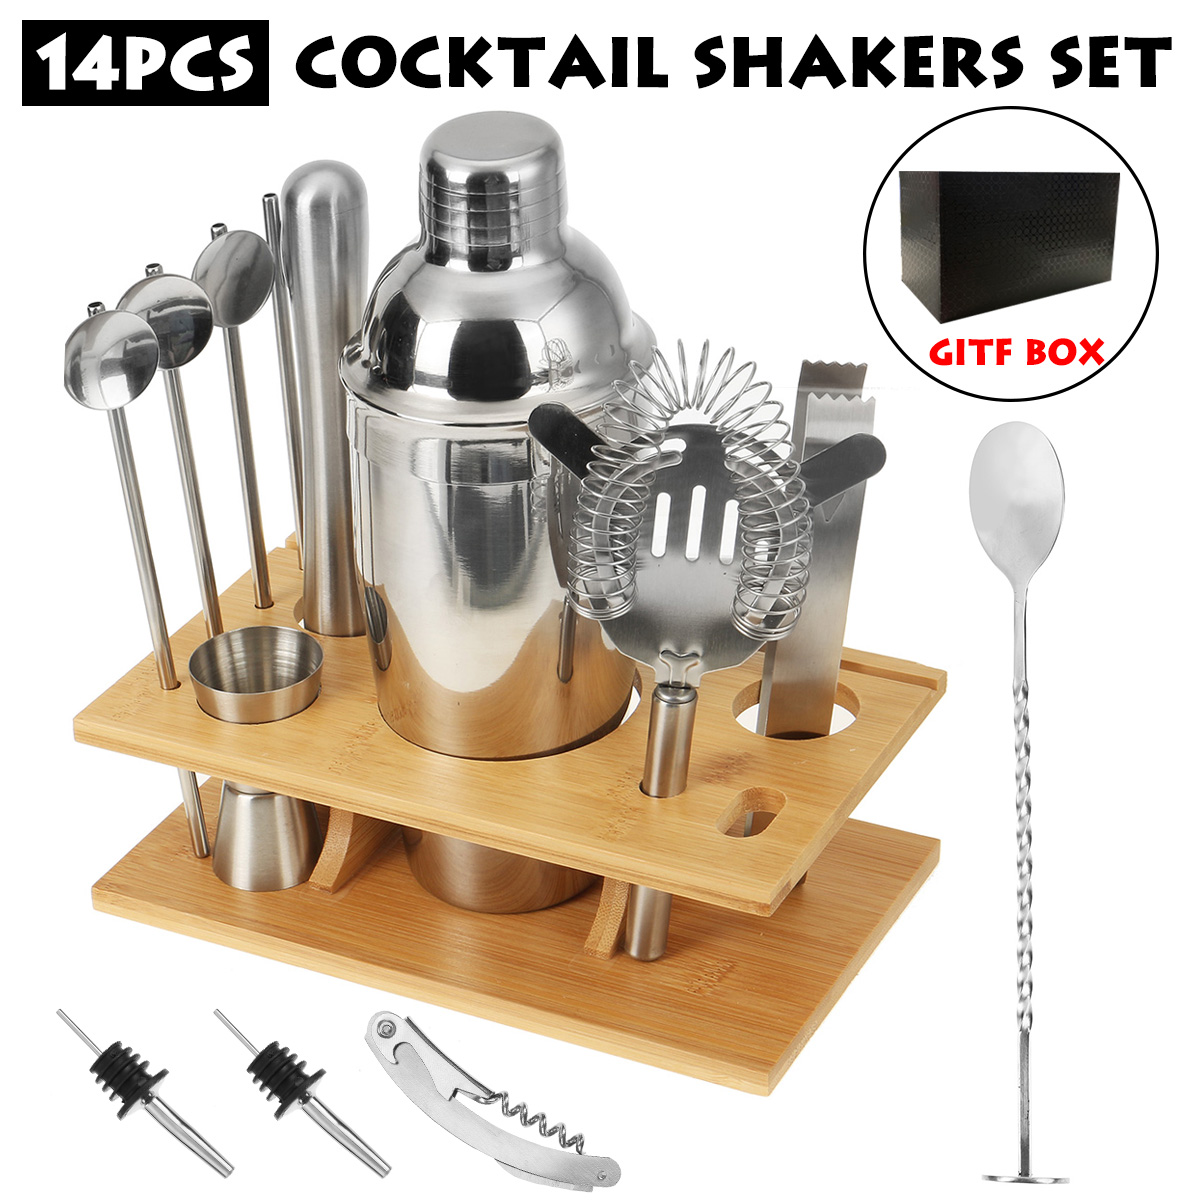 14Pcs-Stainless-Steel-Cocktail-Shaker-Set-Bar-Mixer-Drink-Bartender-Tool-Home-1728110-2